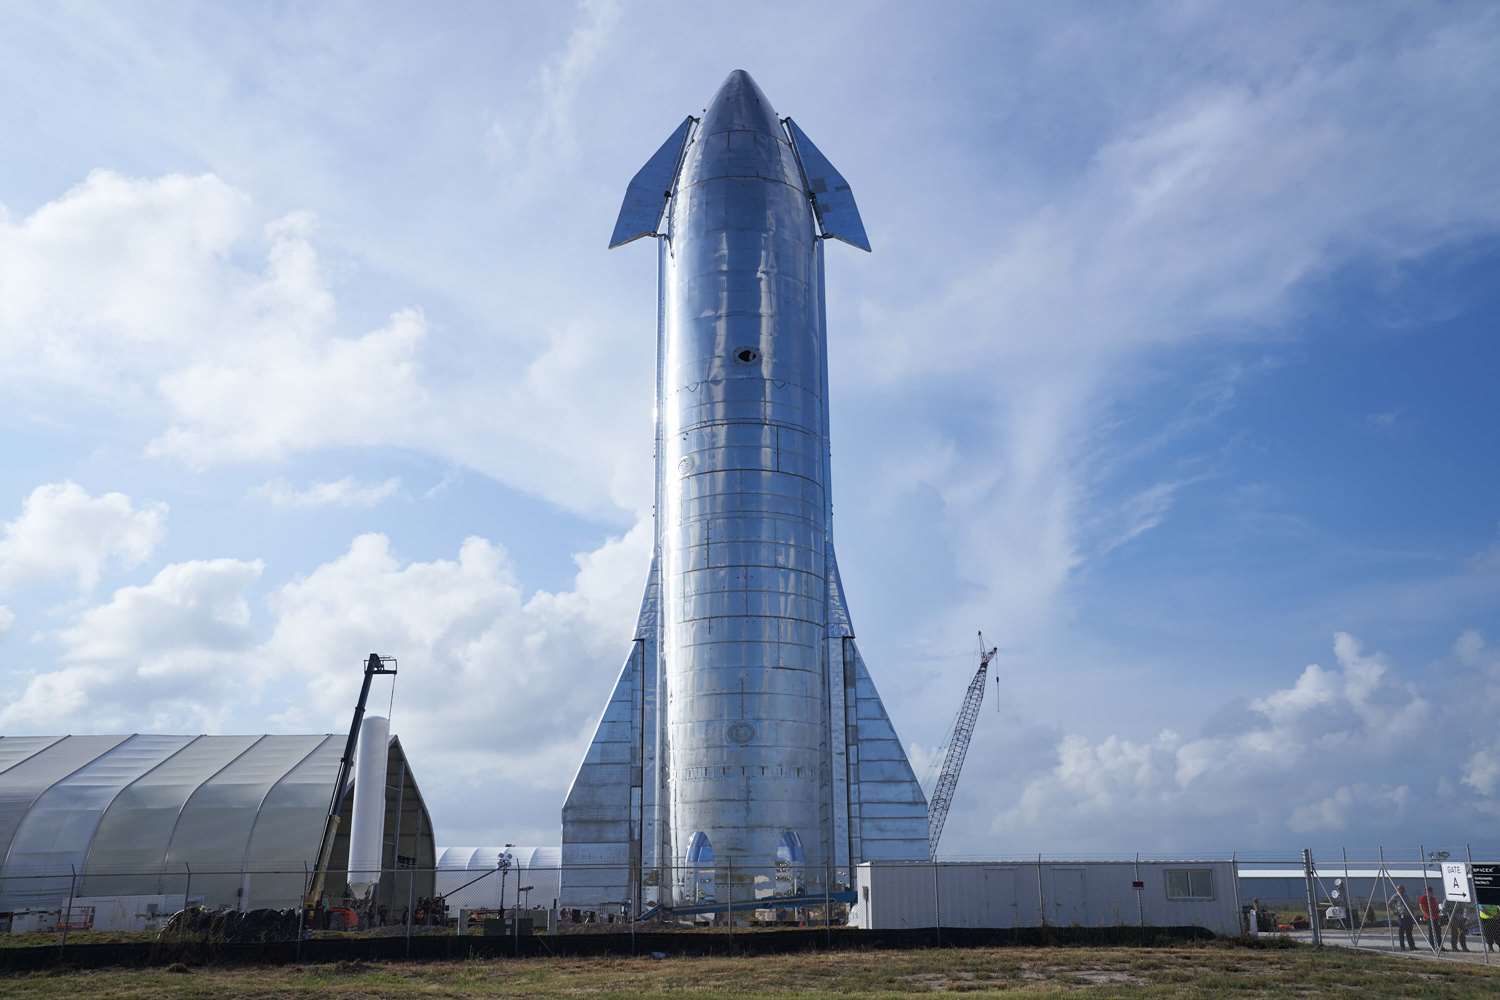 Starship-SpaceX